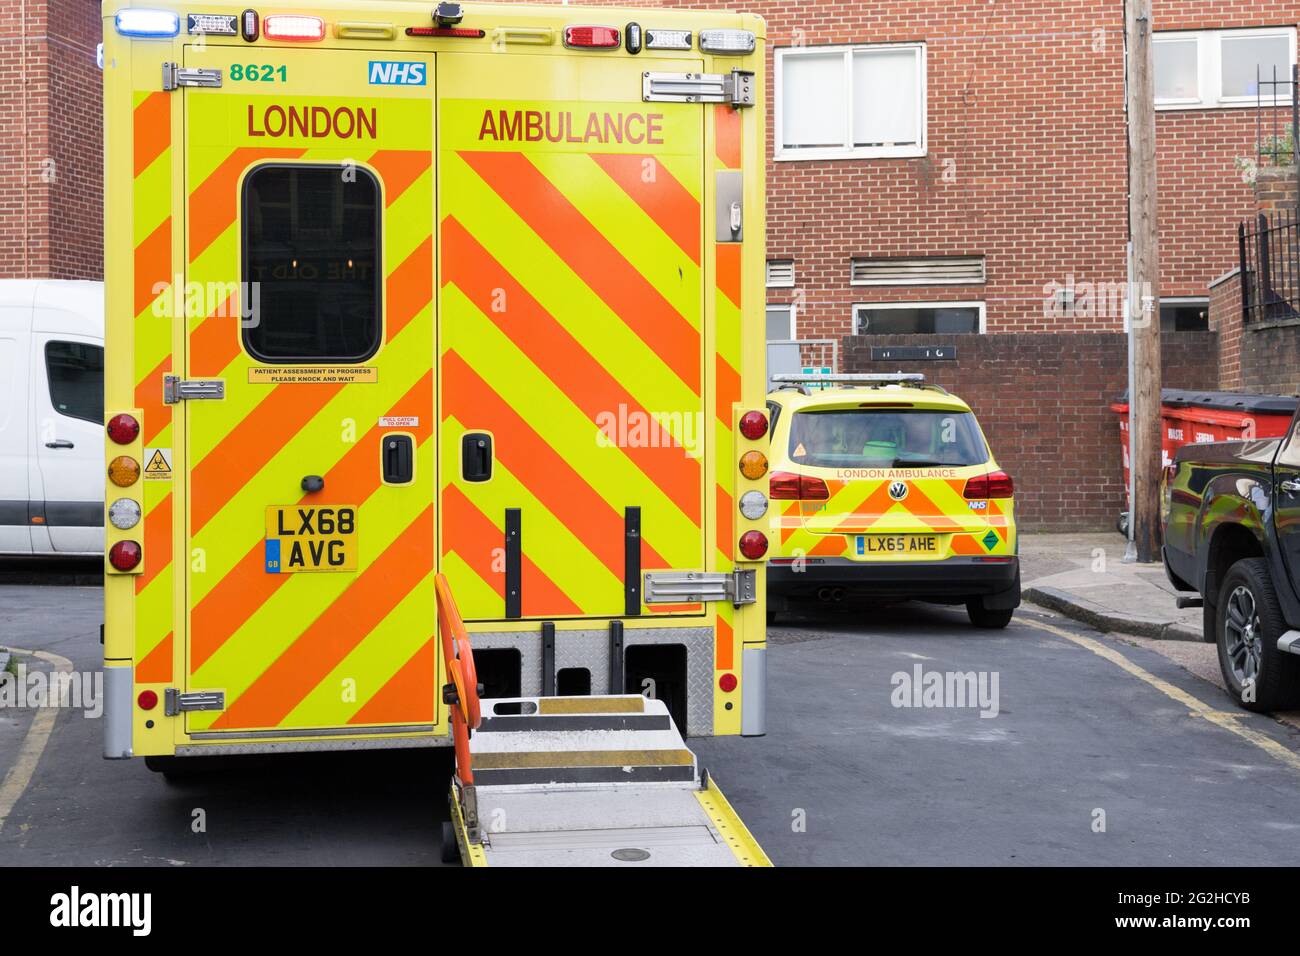 reer view of London ambulance van, London England UK Stock Photo